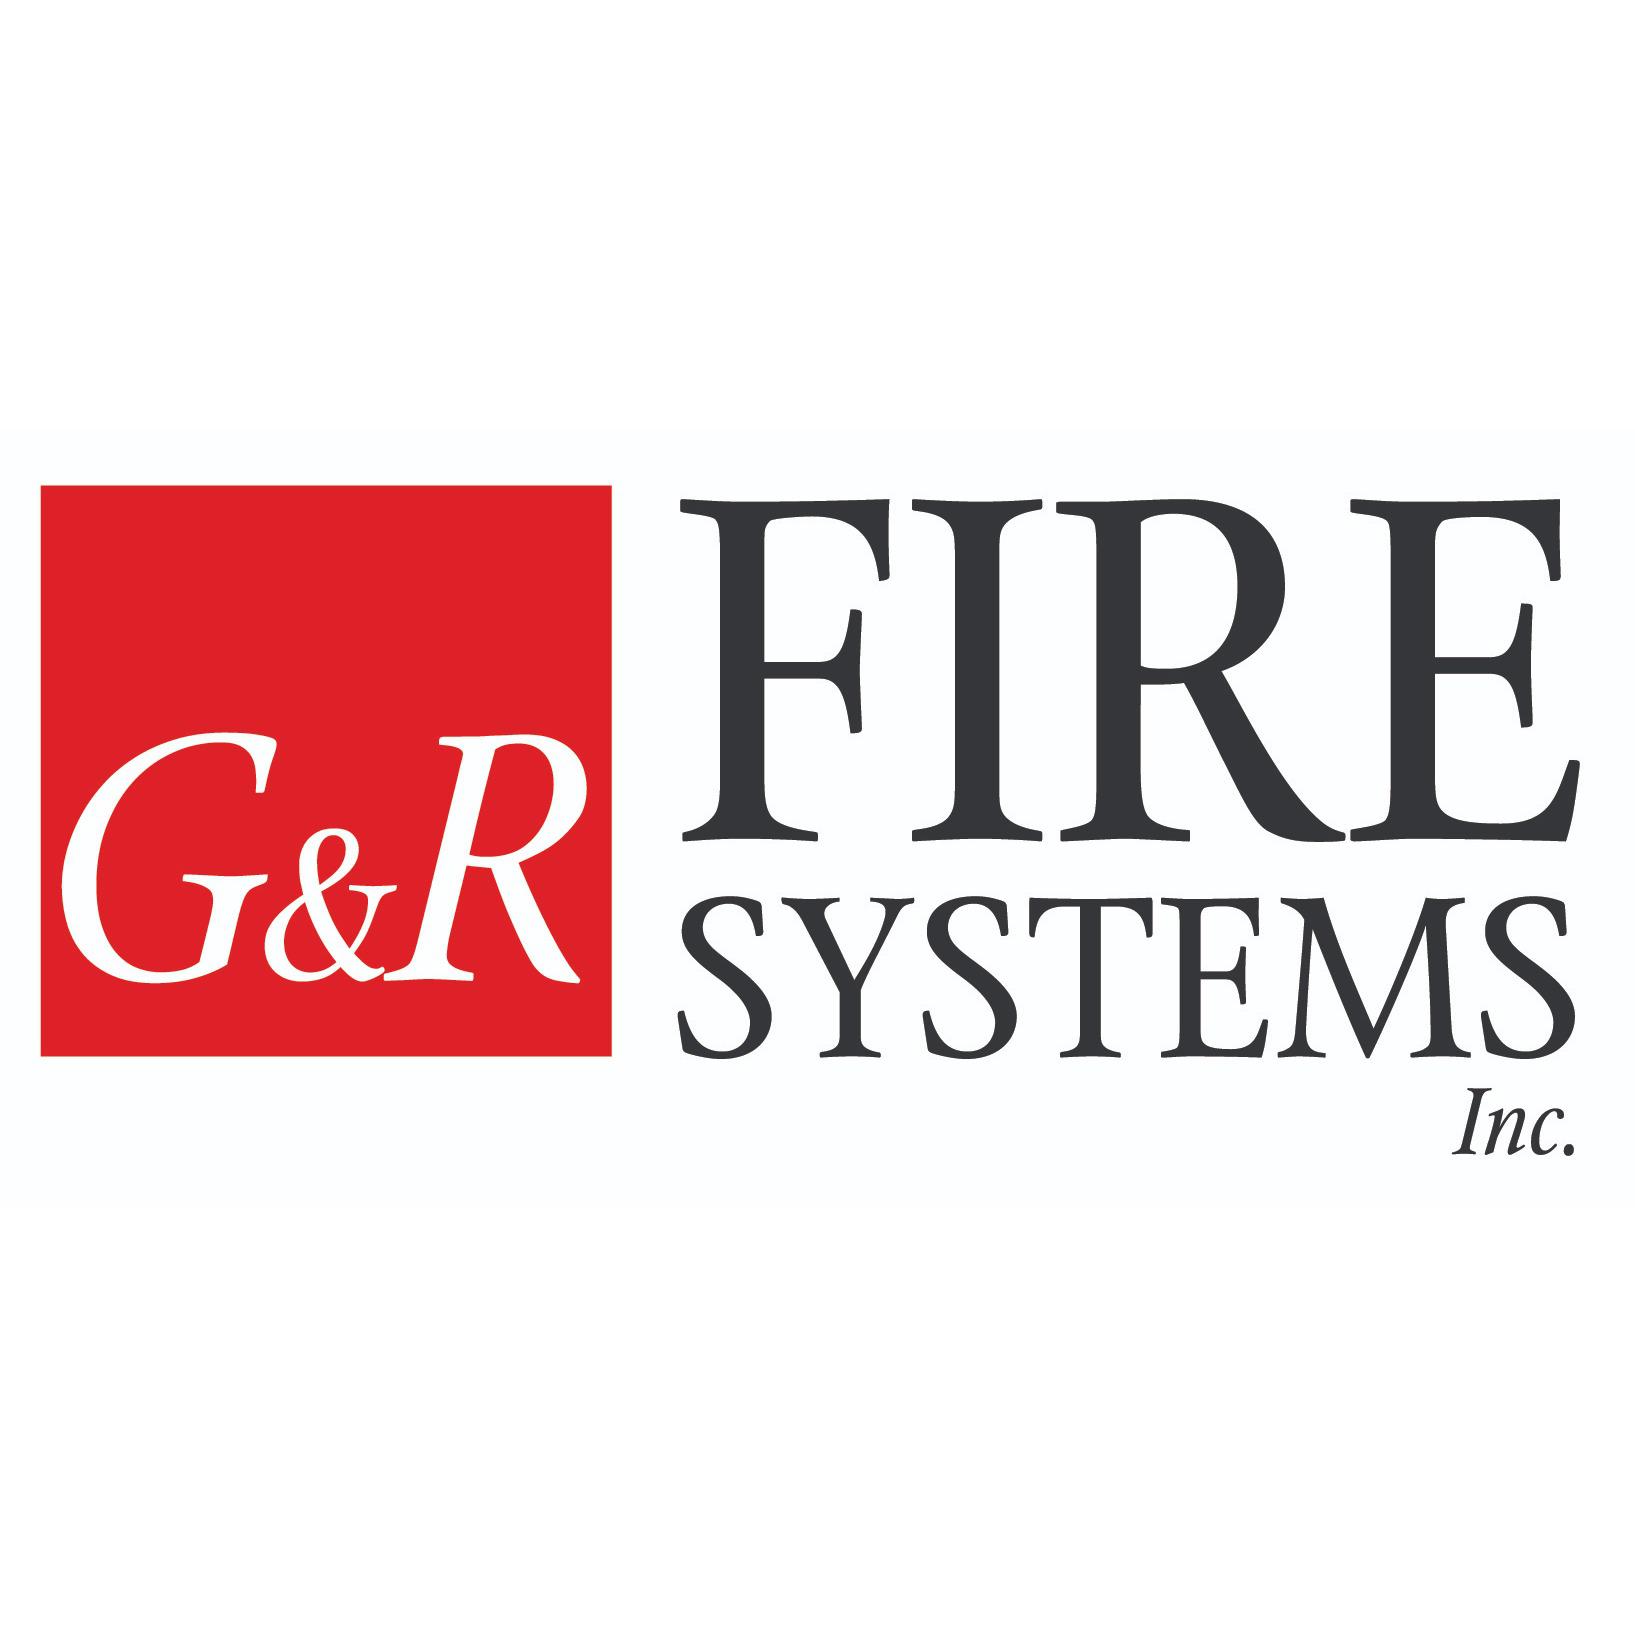 G&R Fire Systems, Inc.